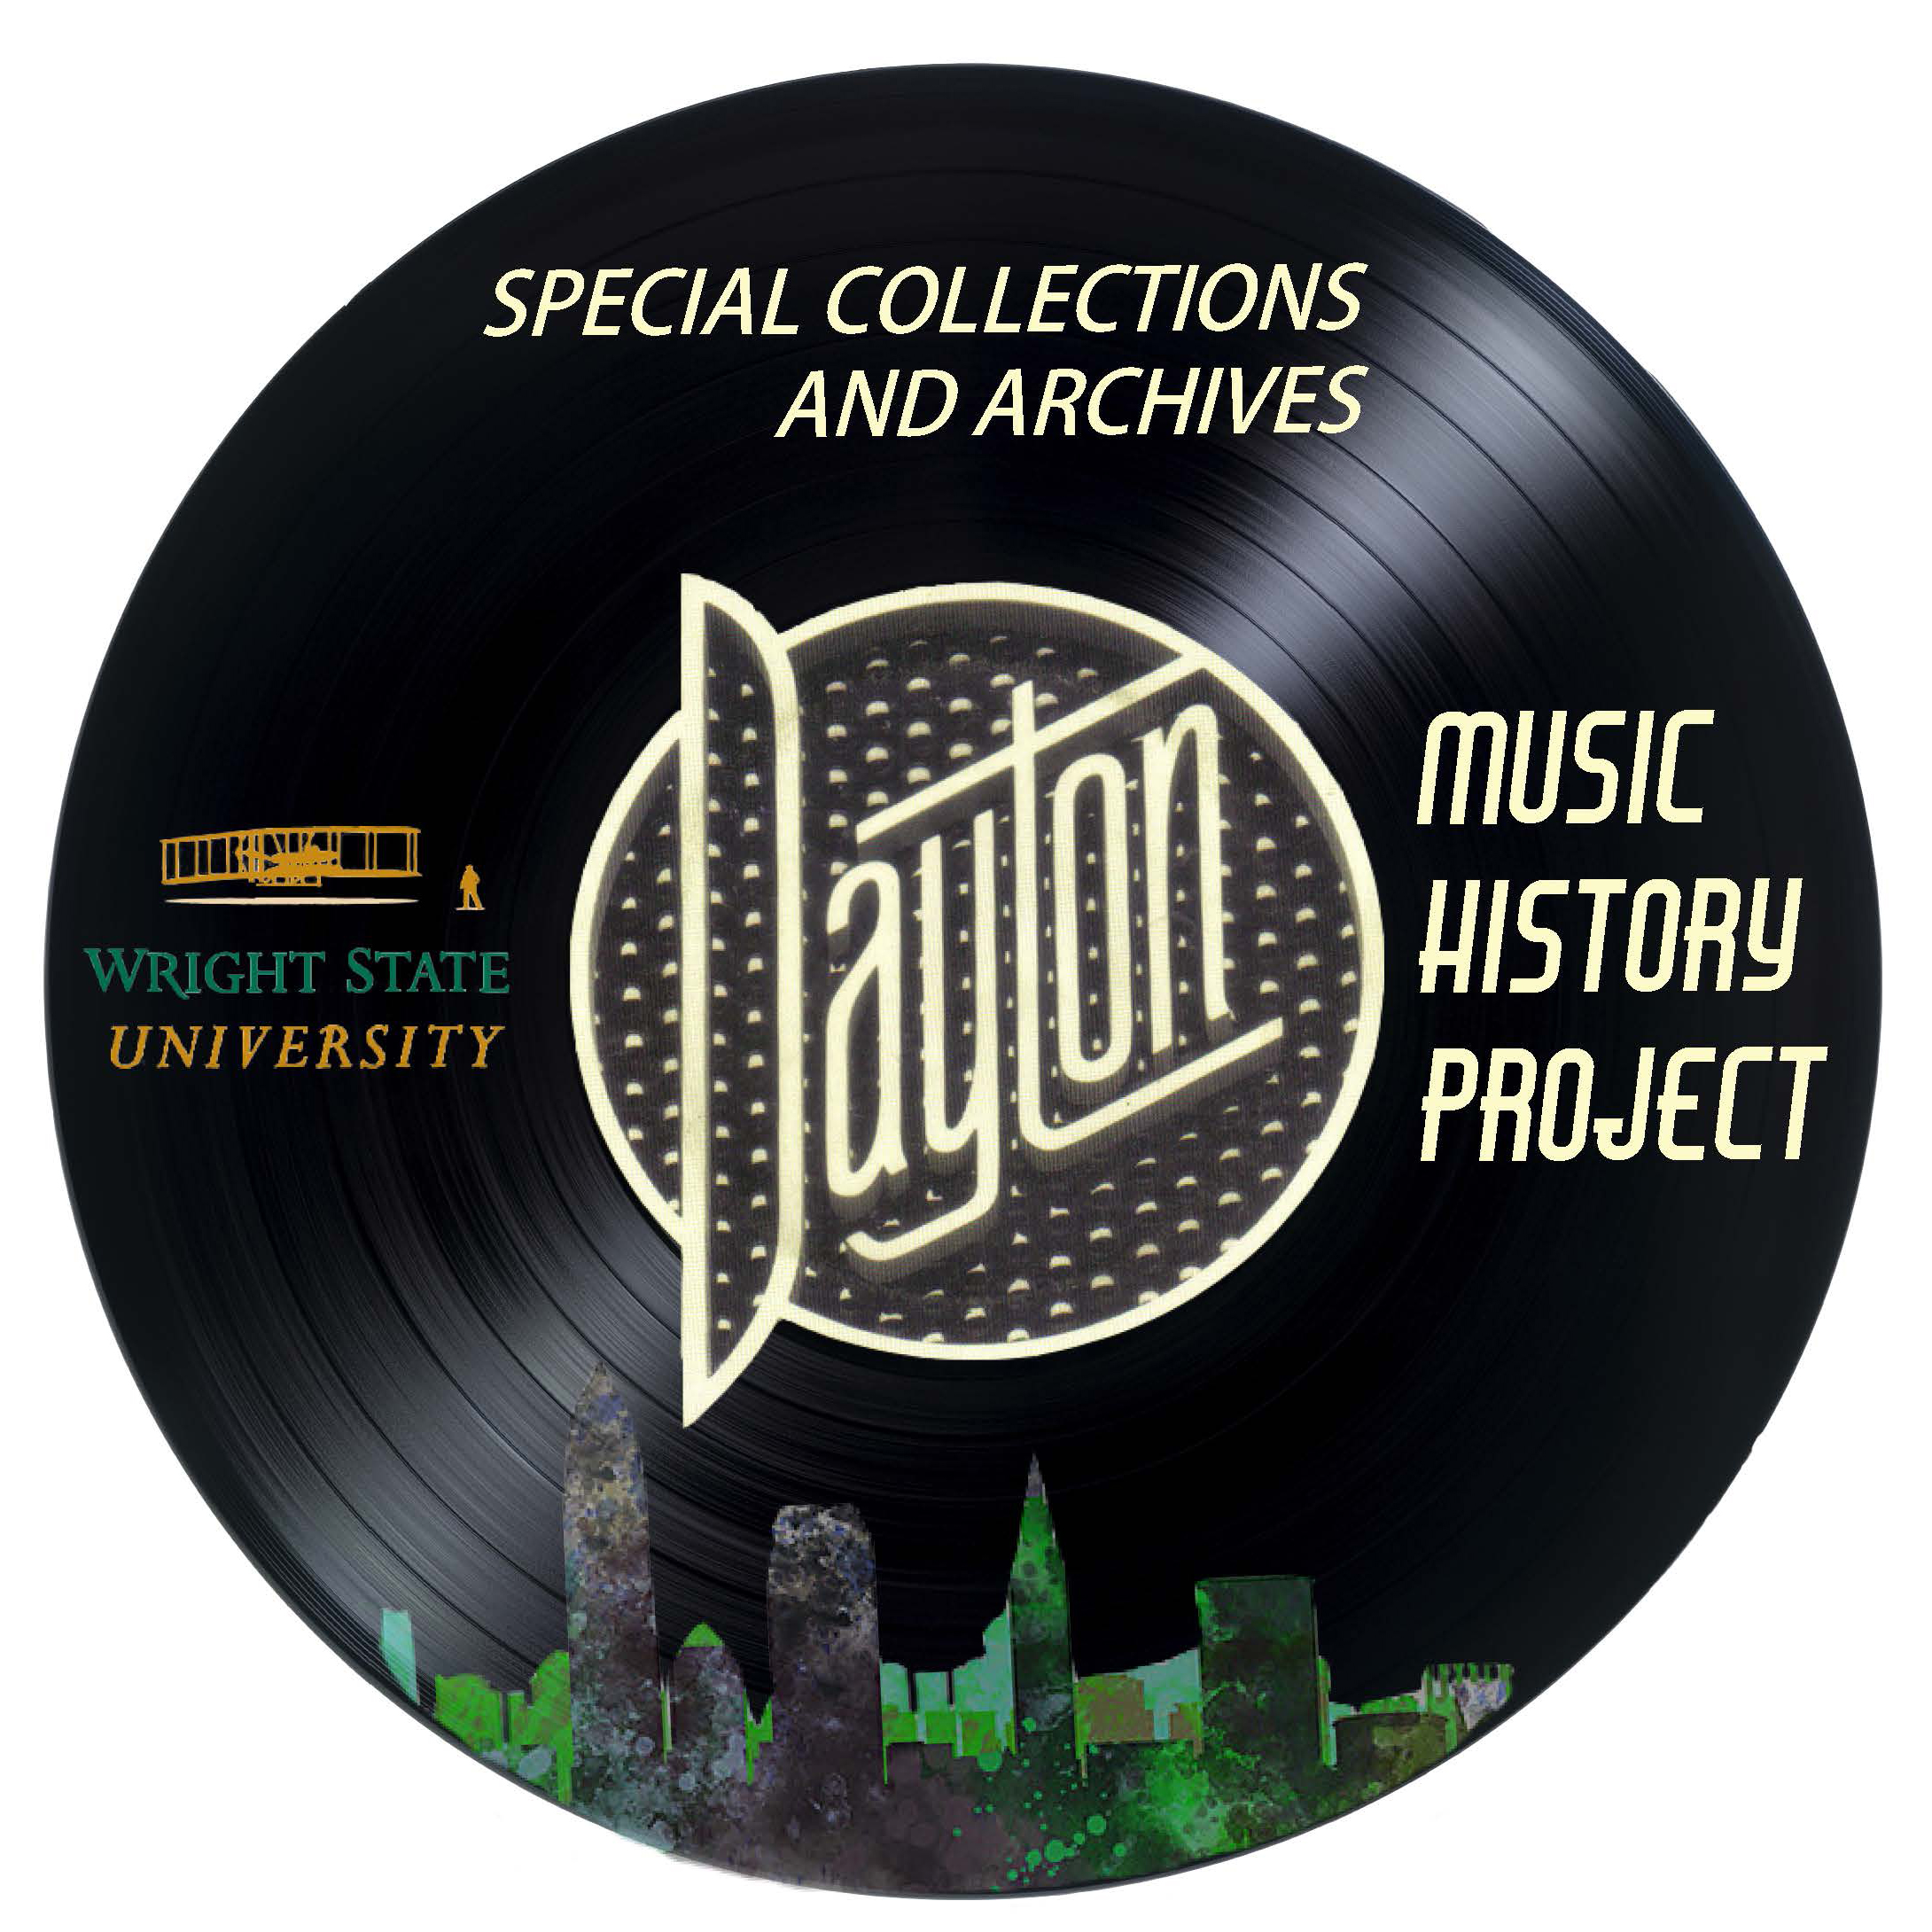 Dayton Music History Project logo only